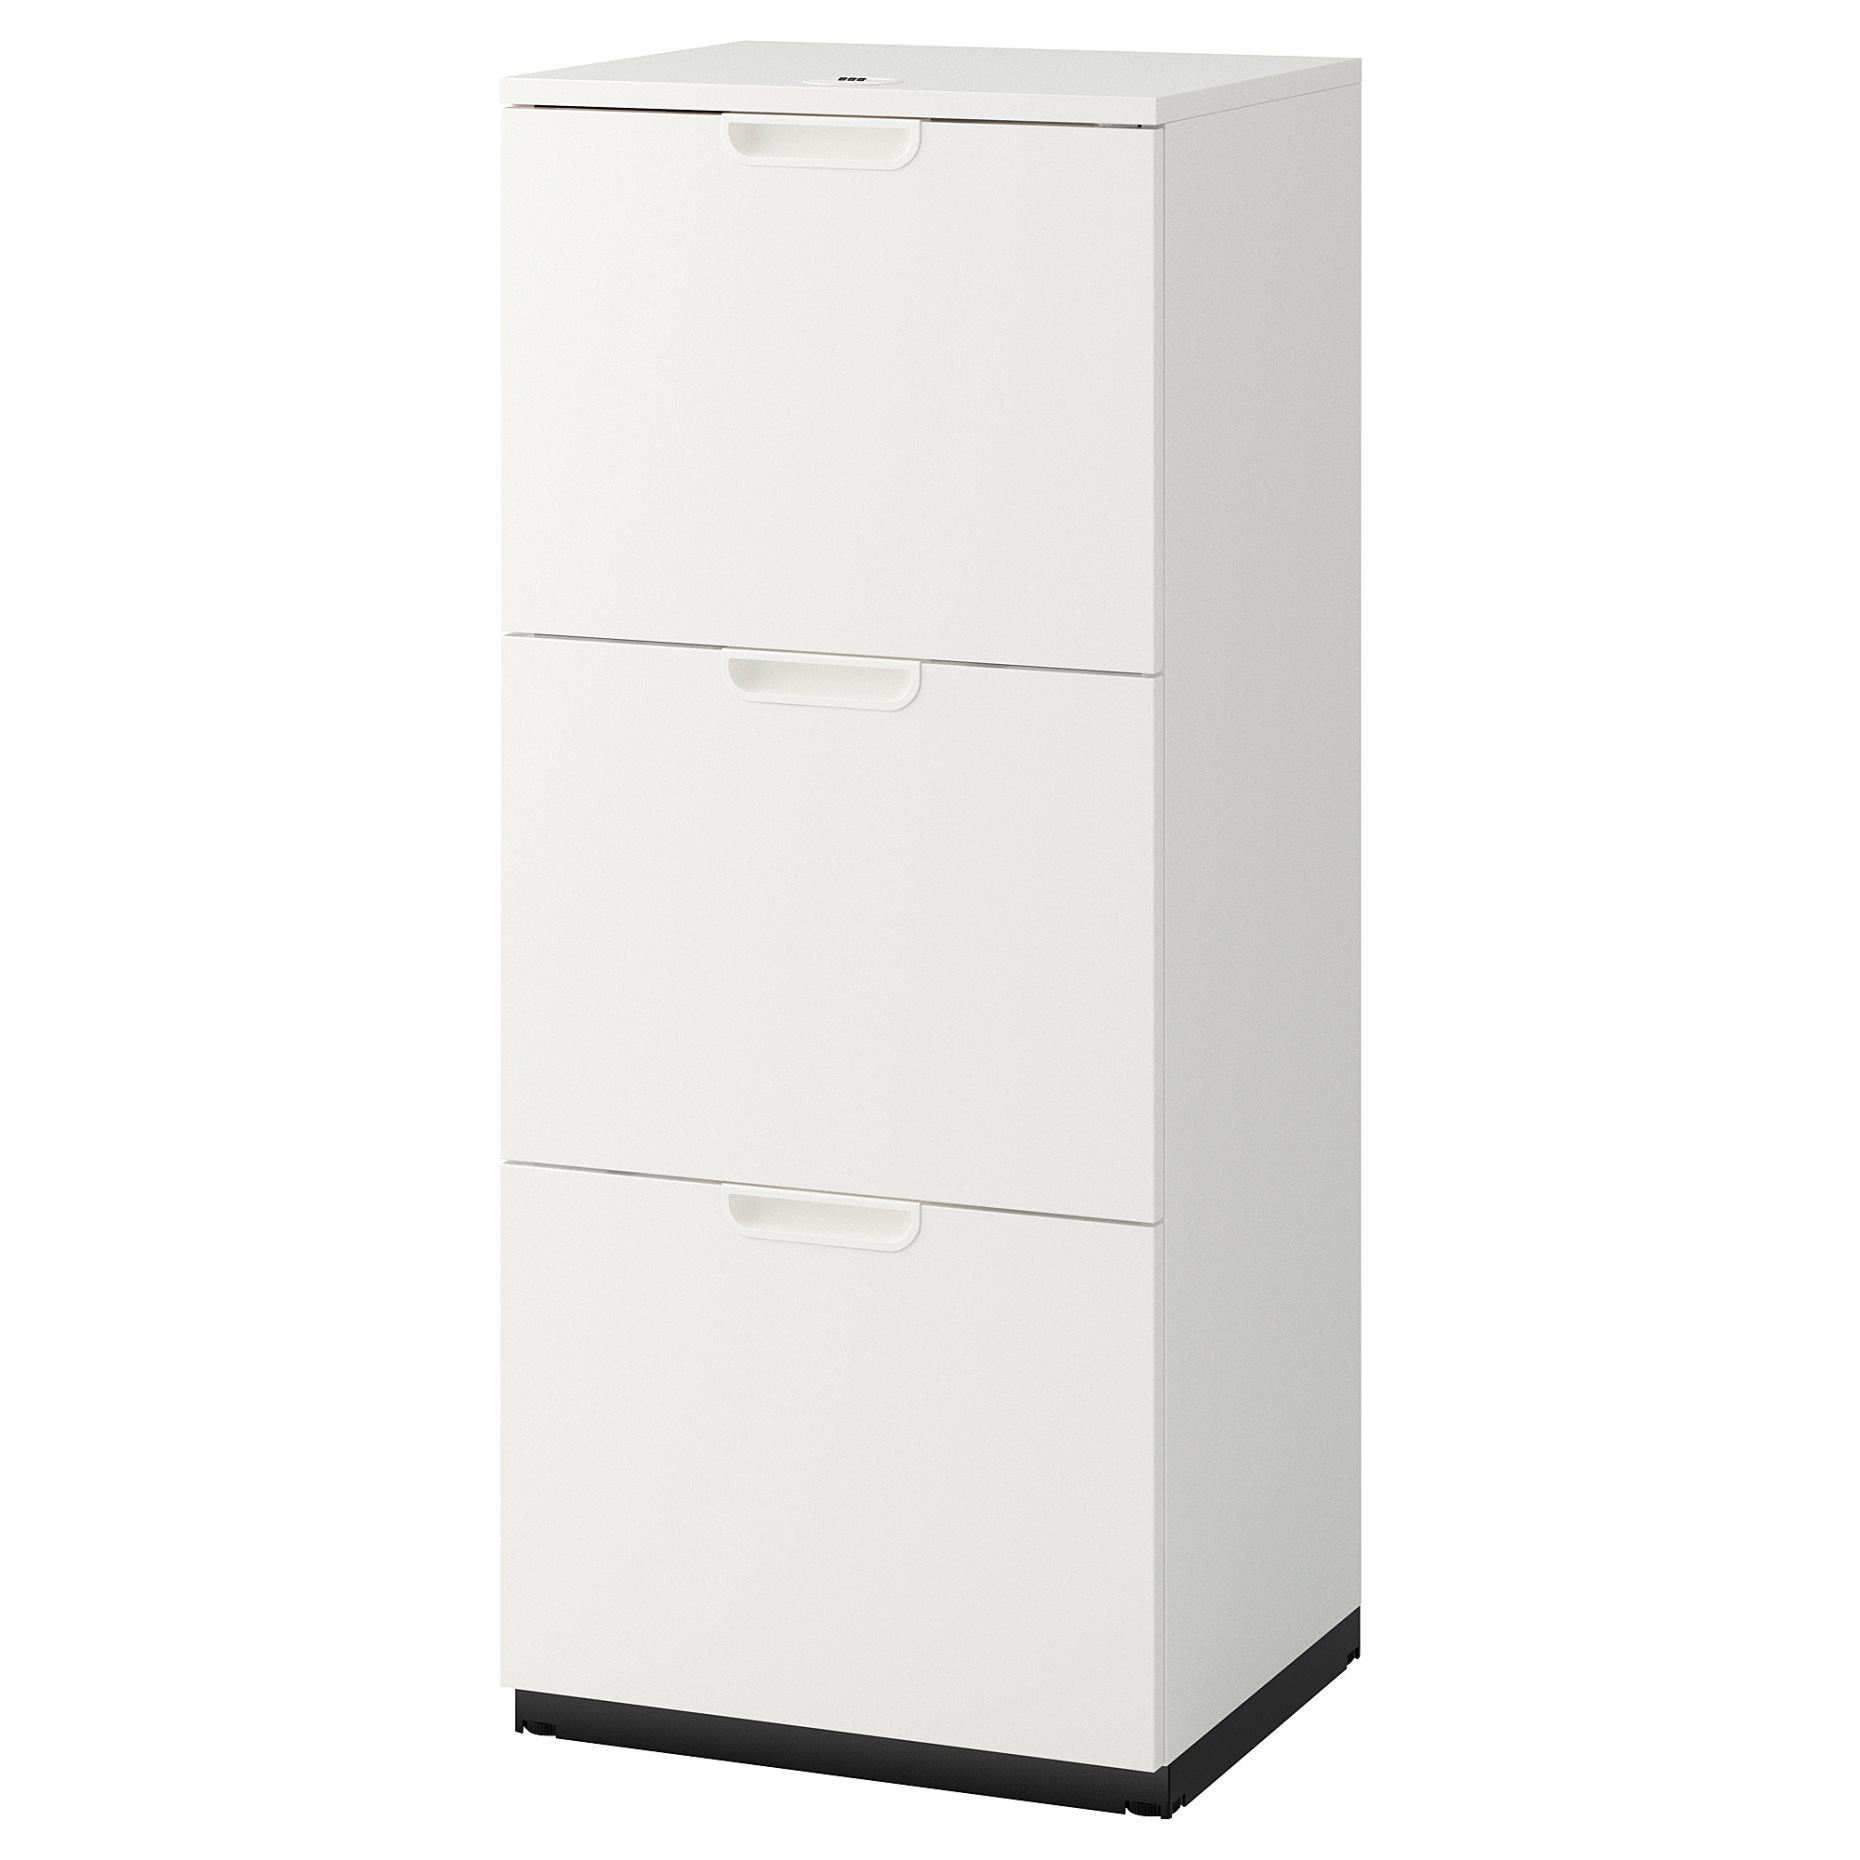 GALANT, file cabinet, 51x120 cm, 803.651.85